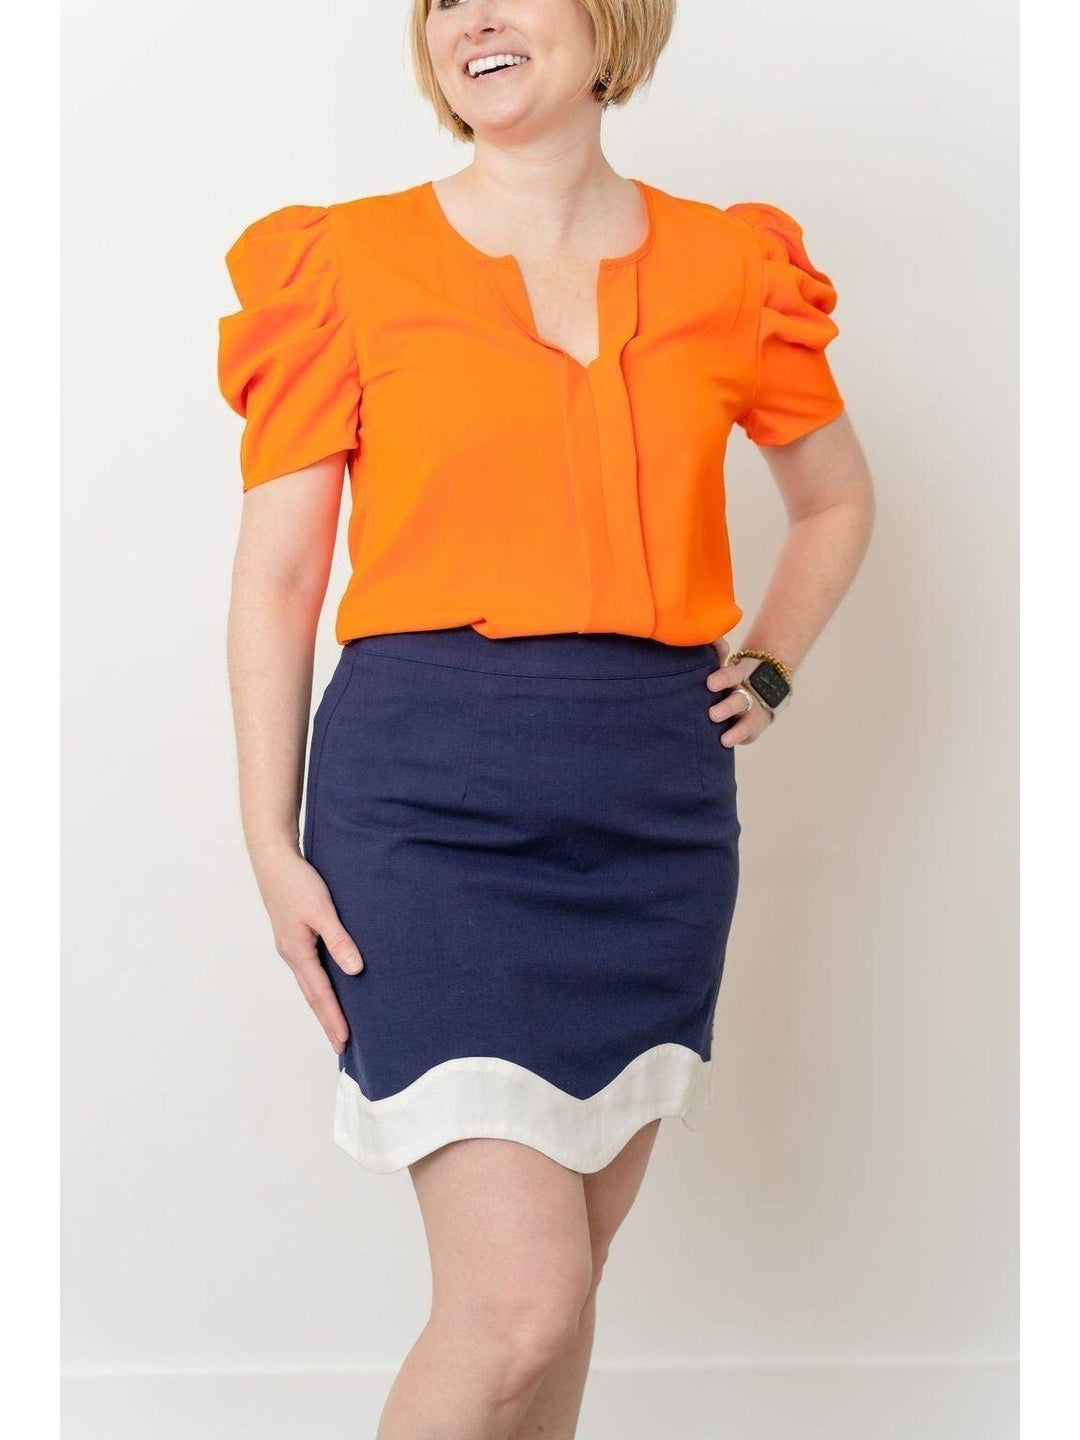 Orange Puff Short Sleeved Top - Lolo Viv Boutique